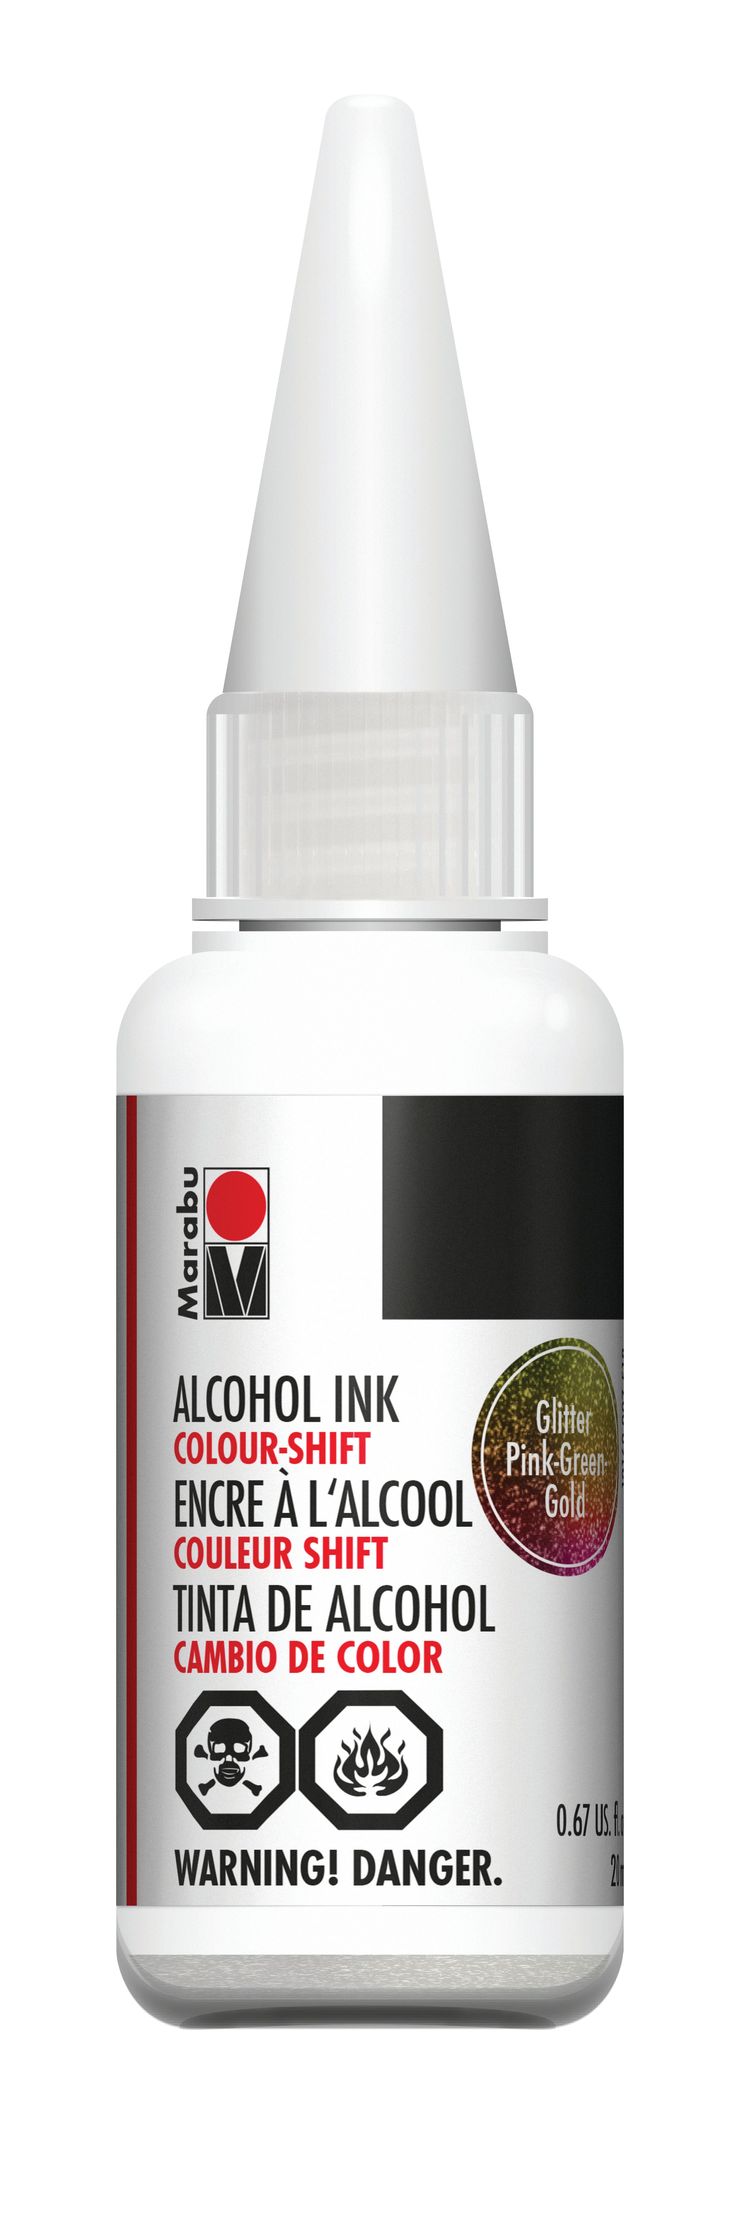 Pink-Green-Gold Glitter 518 Marabu Alcohol Ink